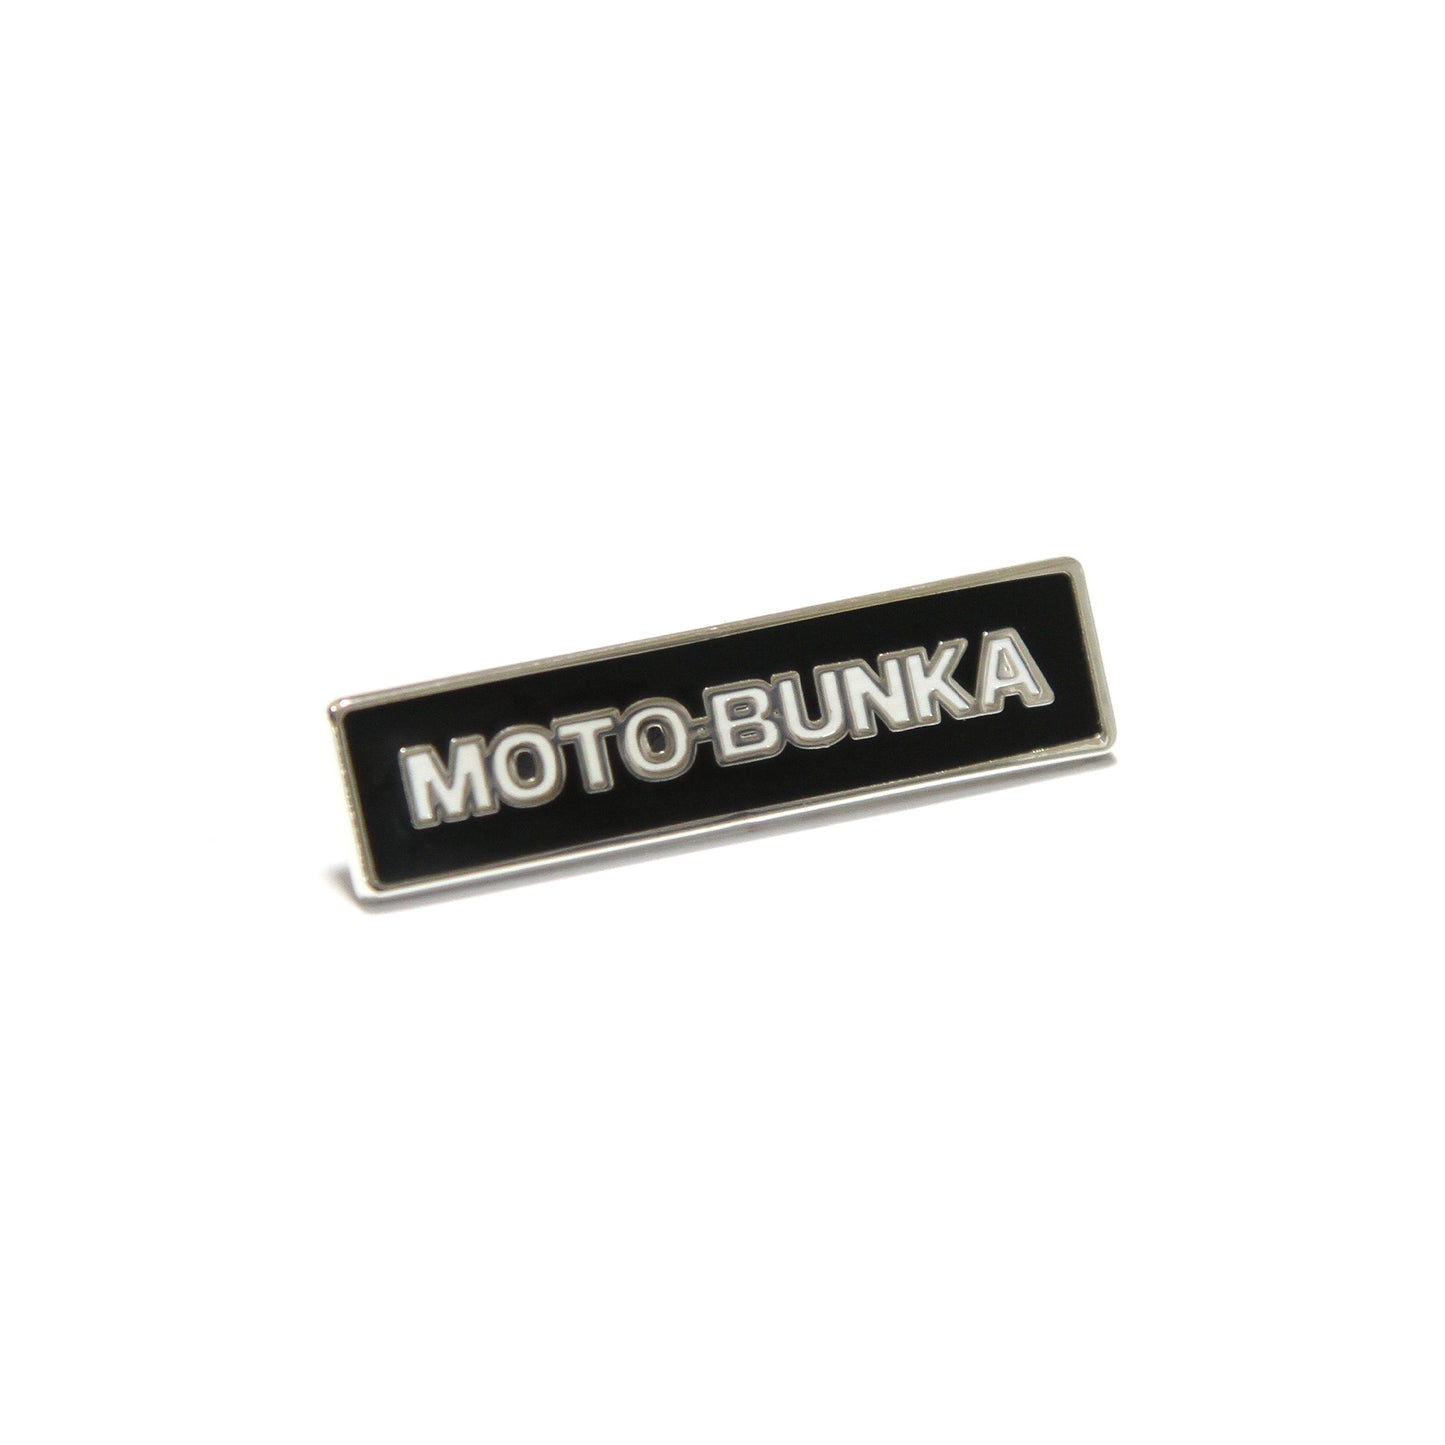 MOTO-BUNKA - Sticker & Pin Badge Set